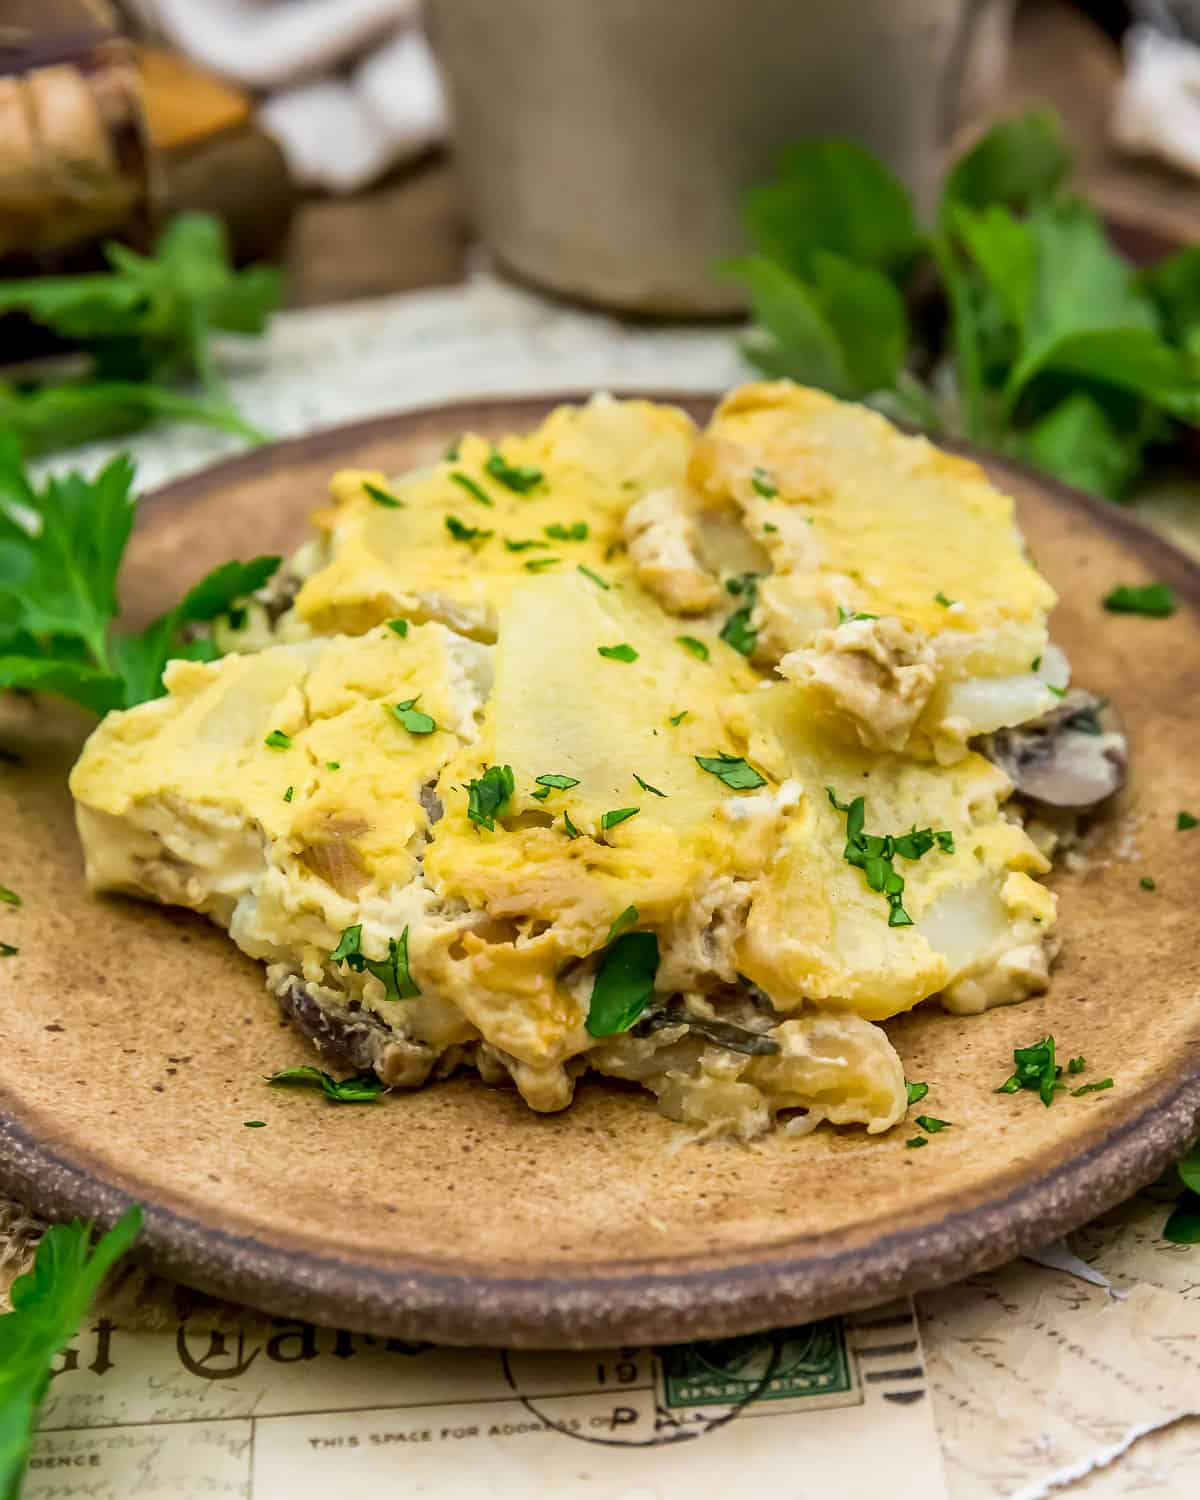 Plate of Vegan Mushroom and Onion Scalloped Potatoes